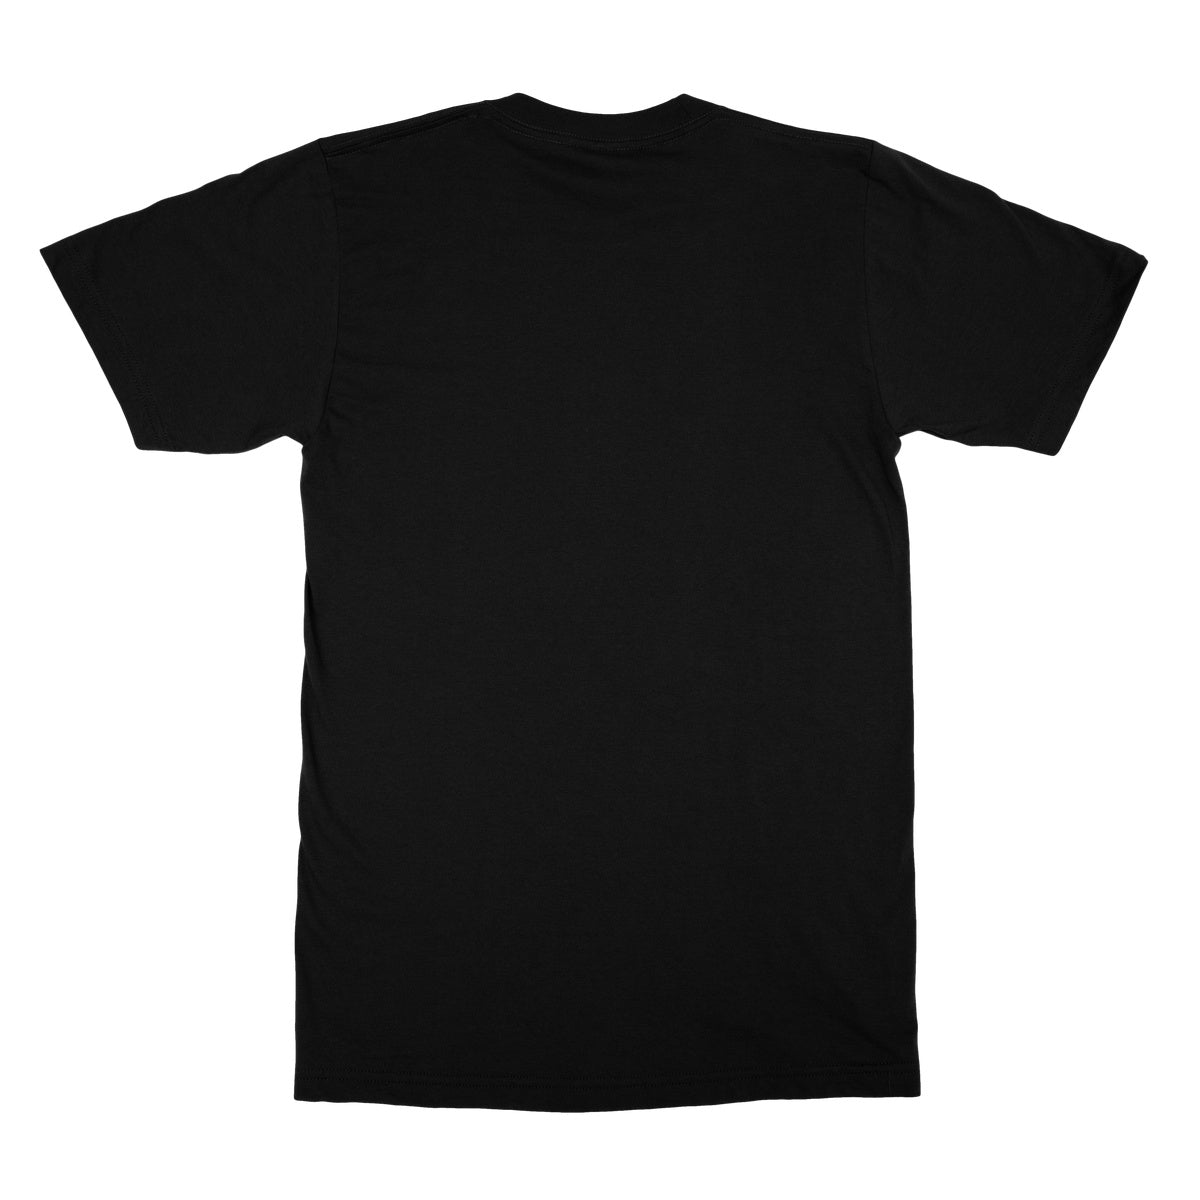 Luna Reign Black T-Shirt